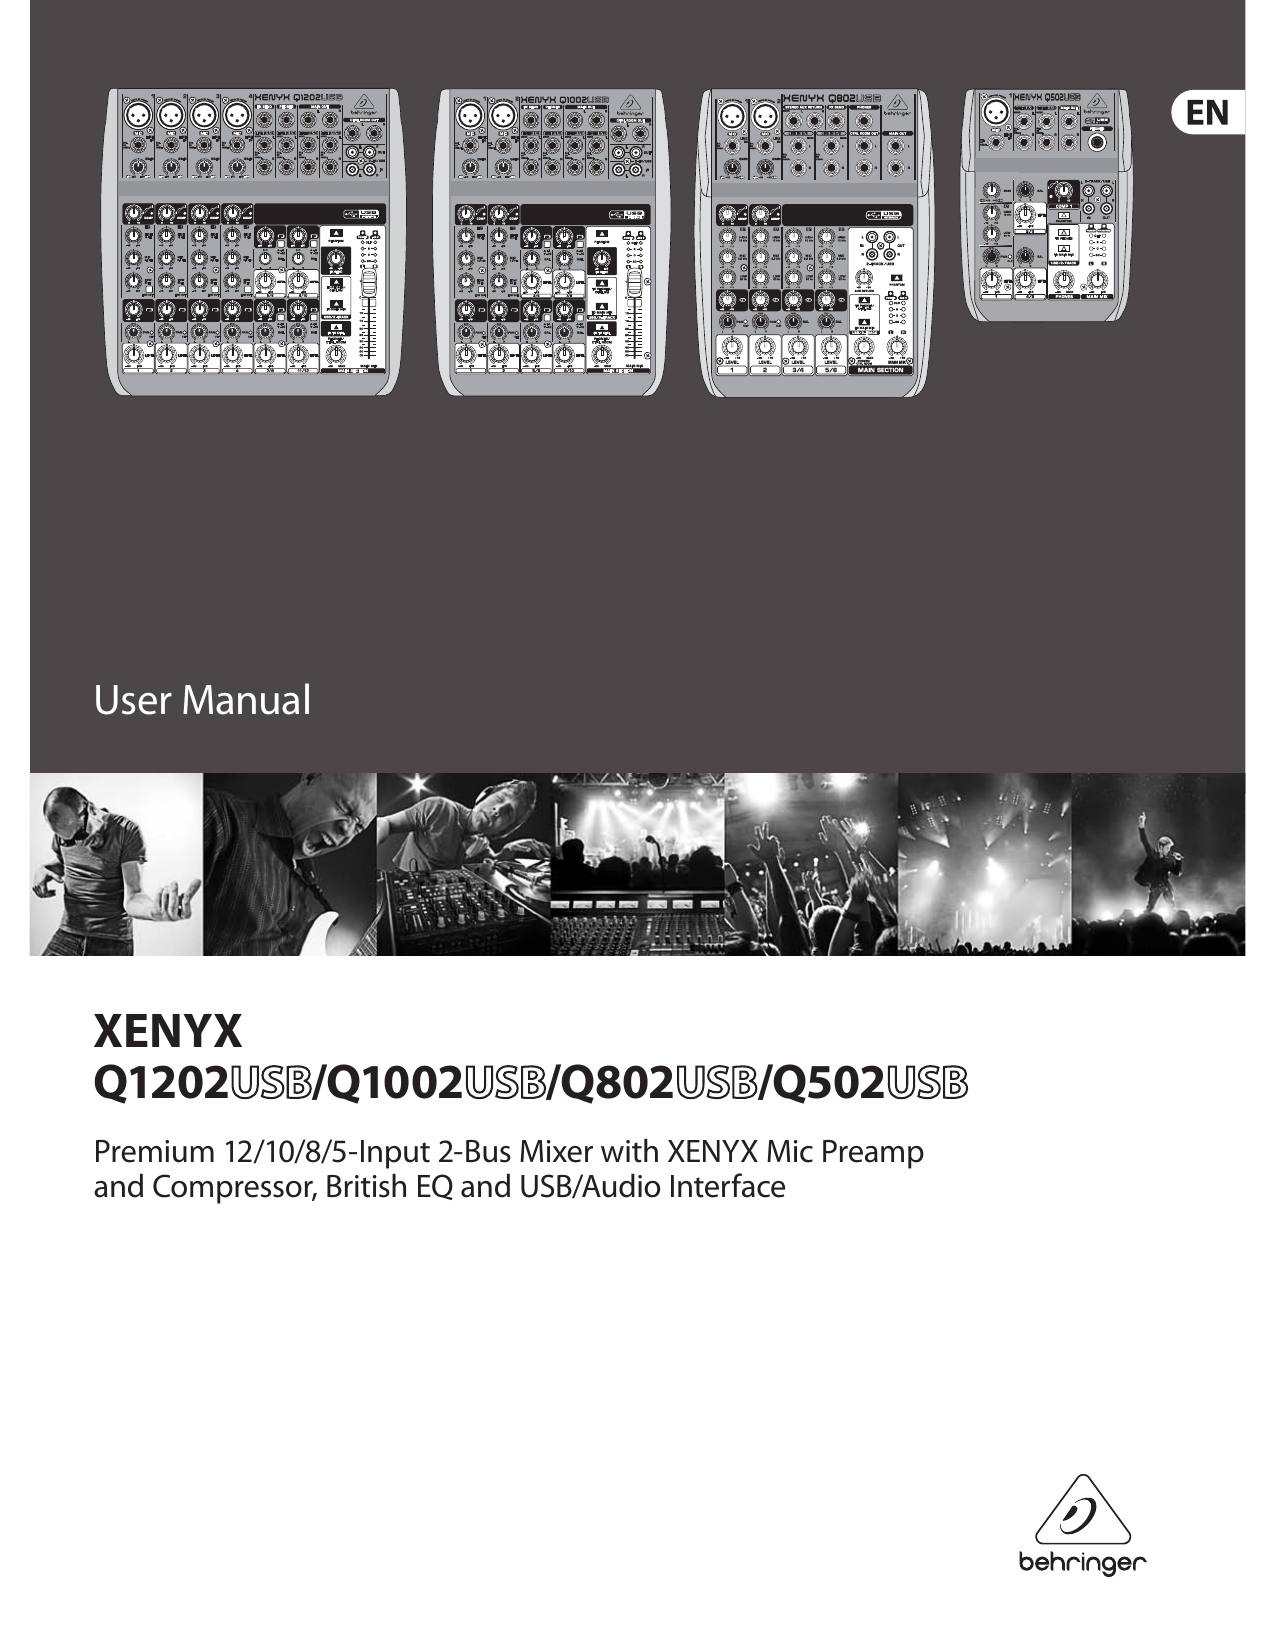 behringer xenyx q802usb one knob compression